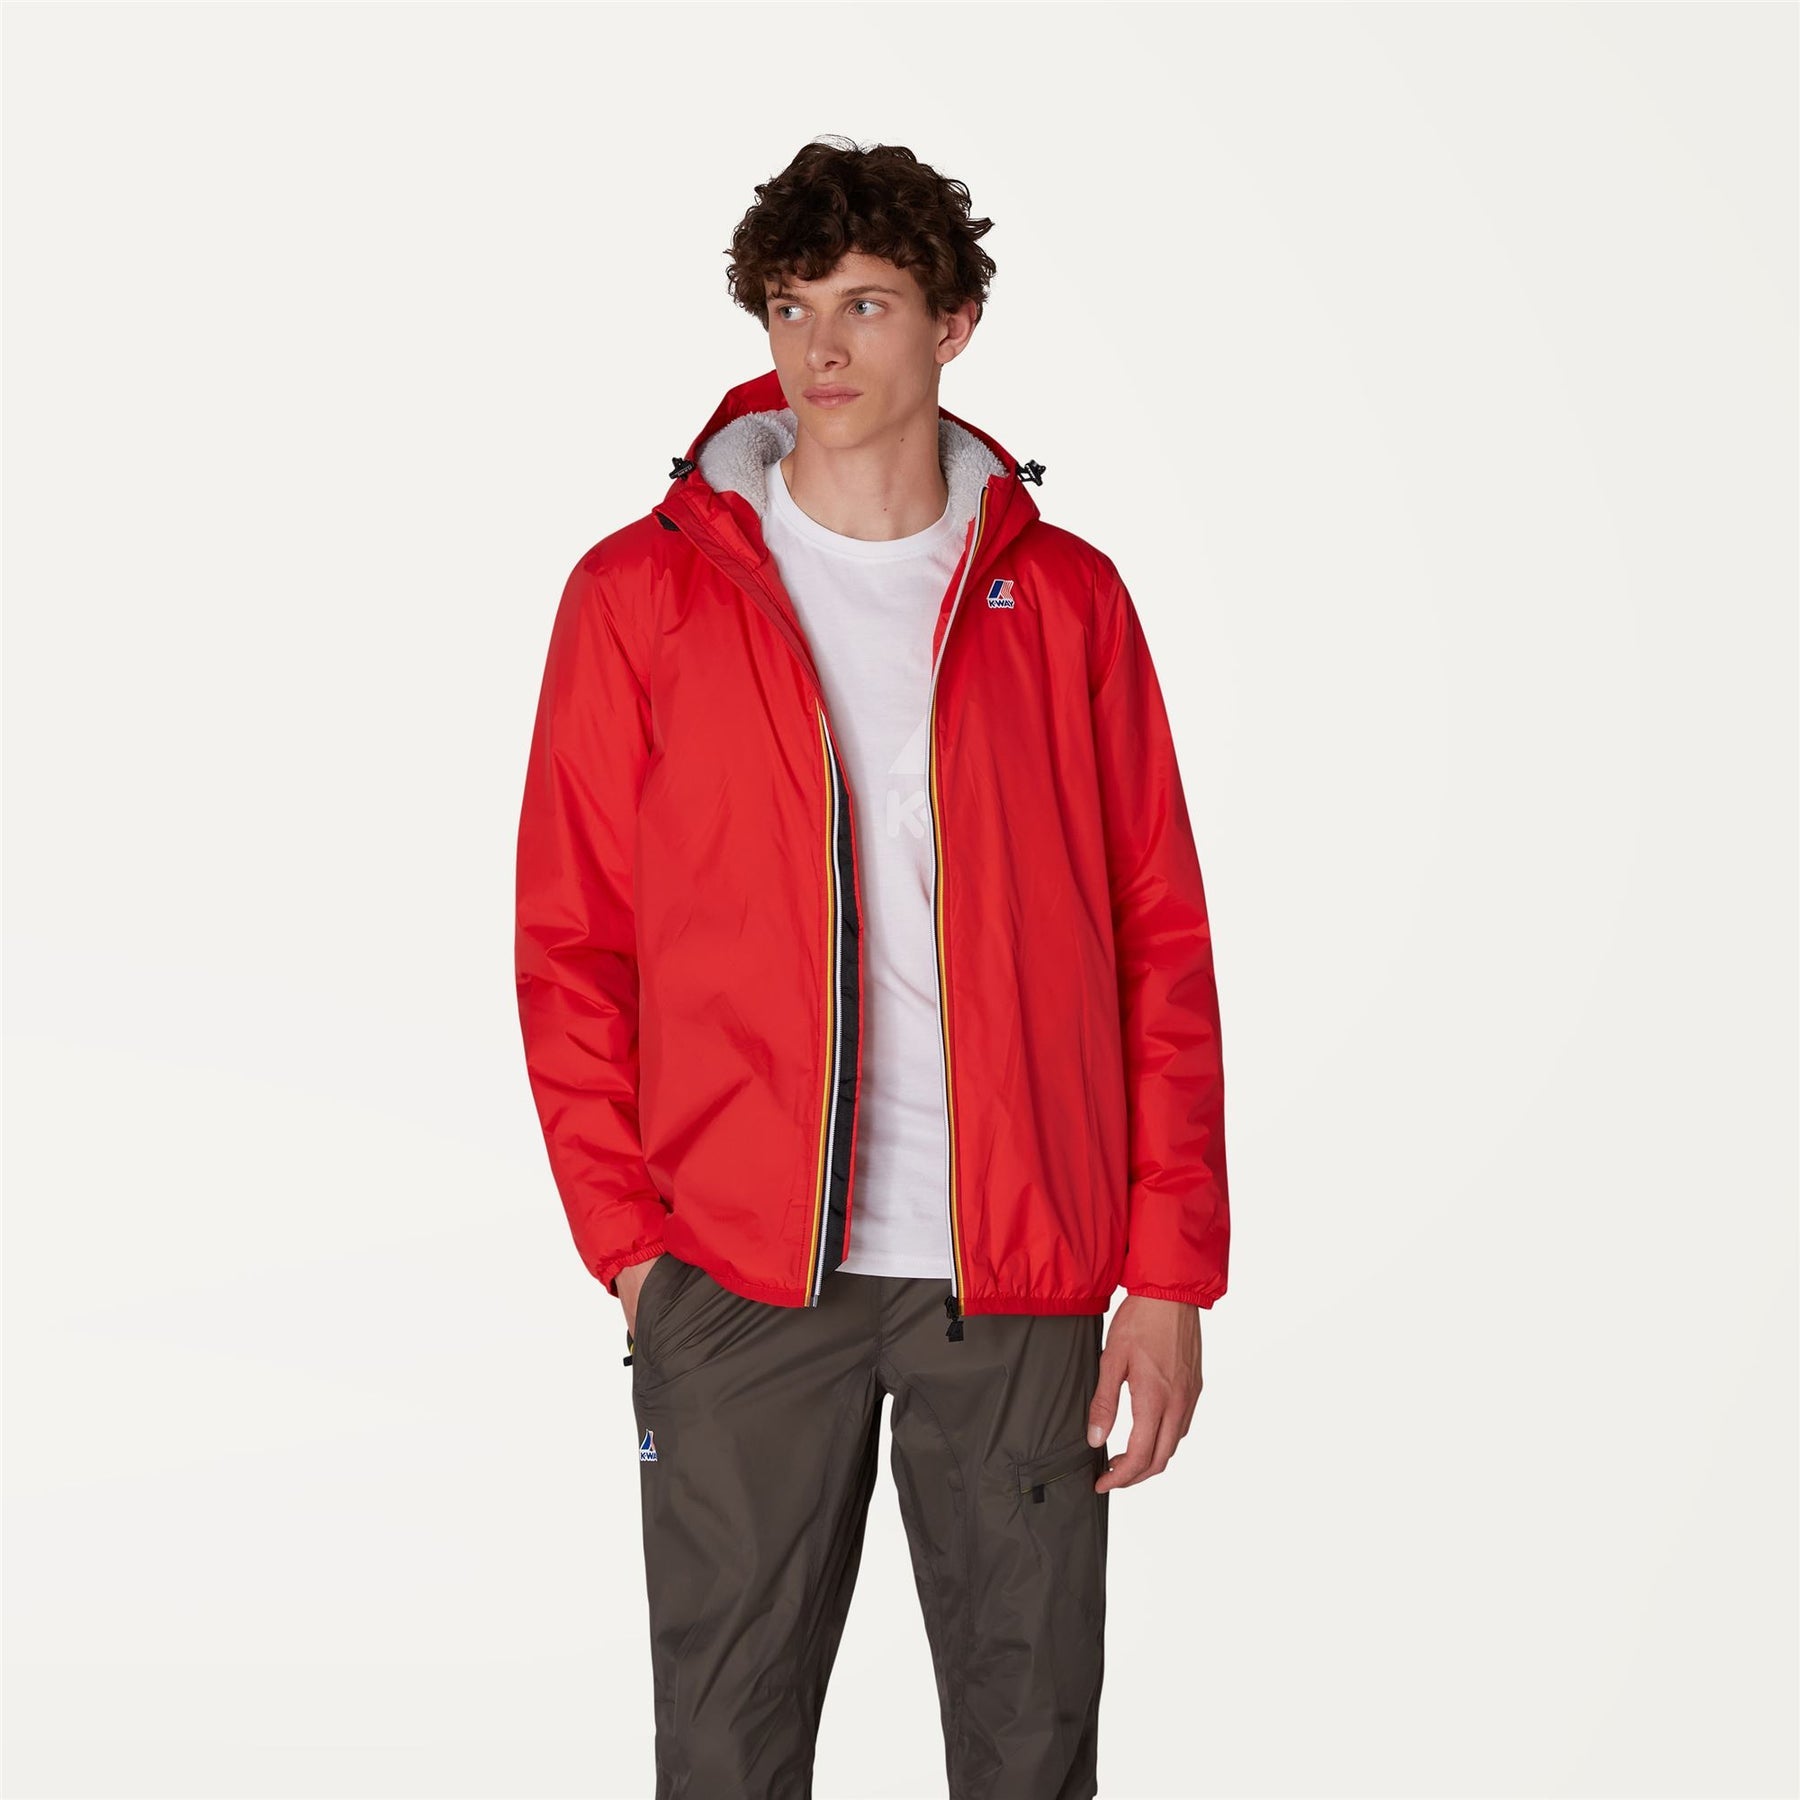 Waterproof Full-Zip Rain Jacket